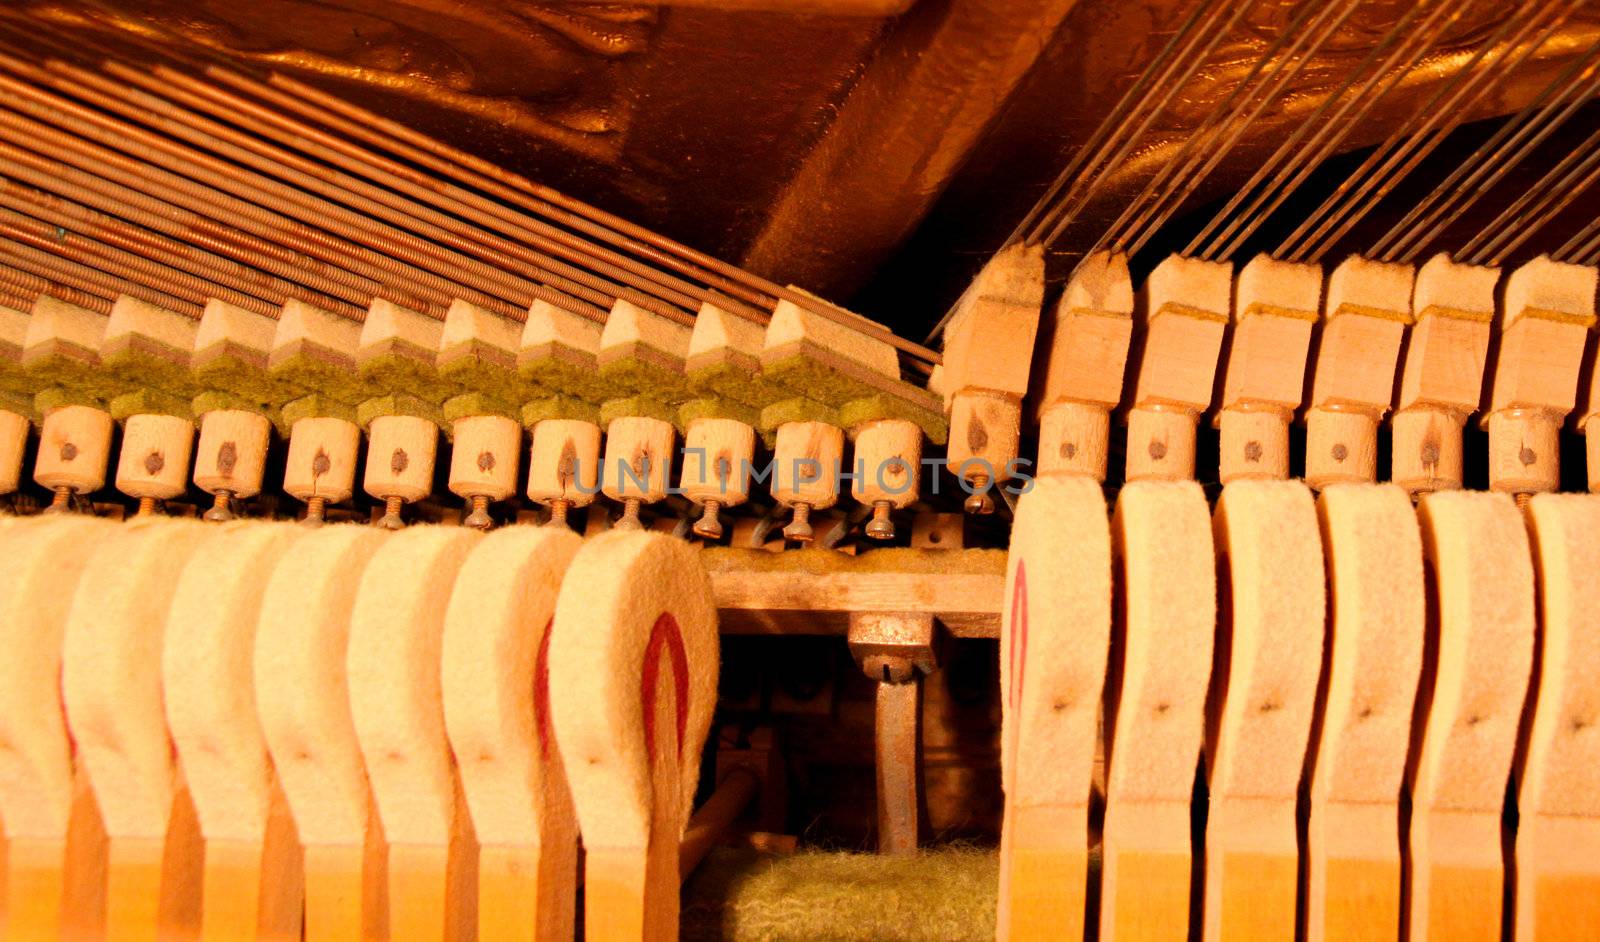 Inside an Upright Piano - Felt Hammers used to strike Steel Strings